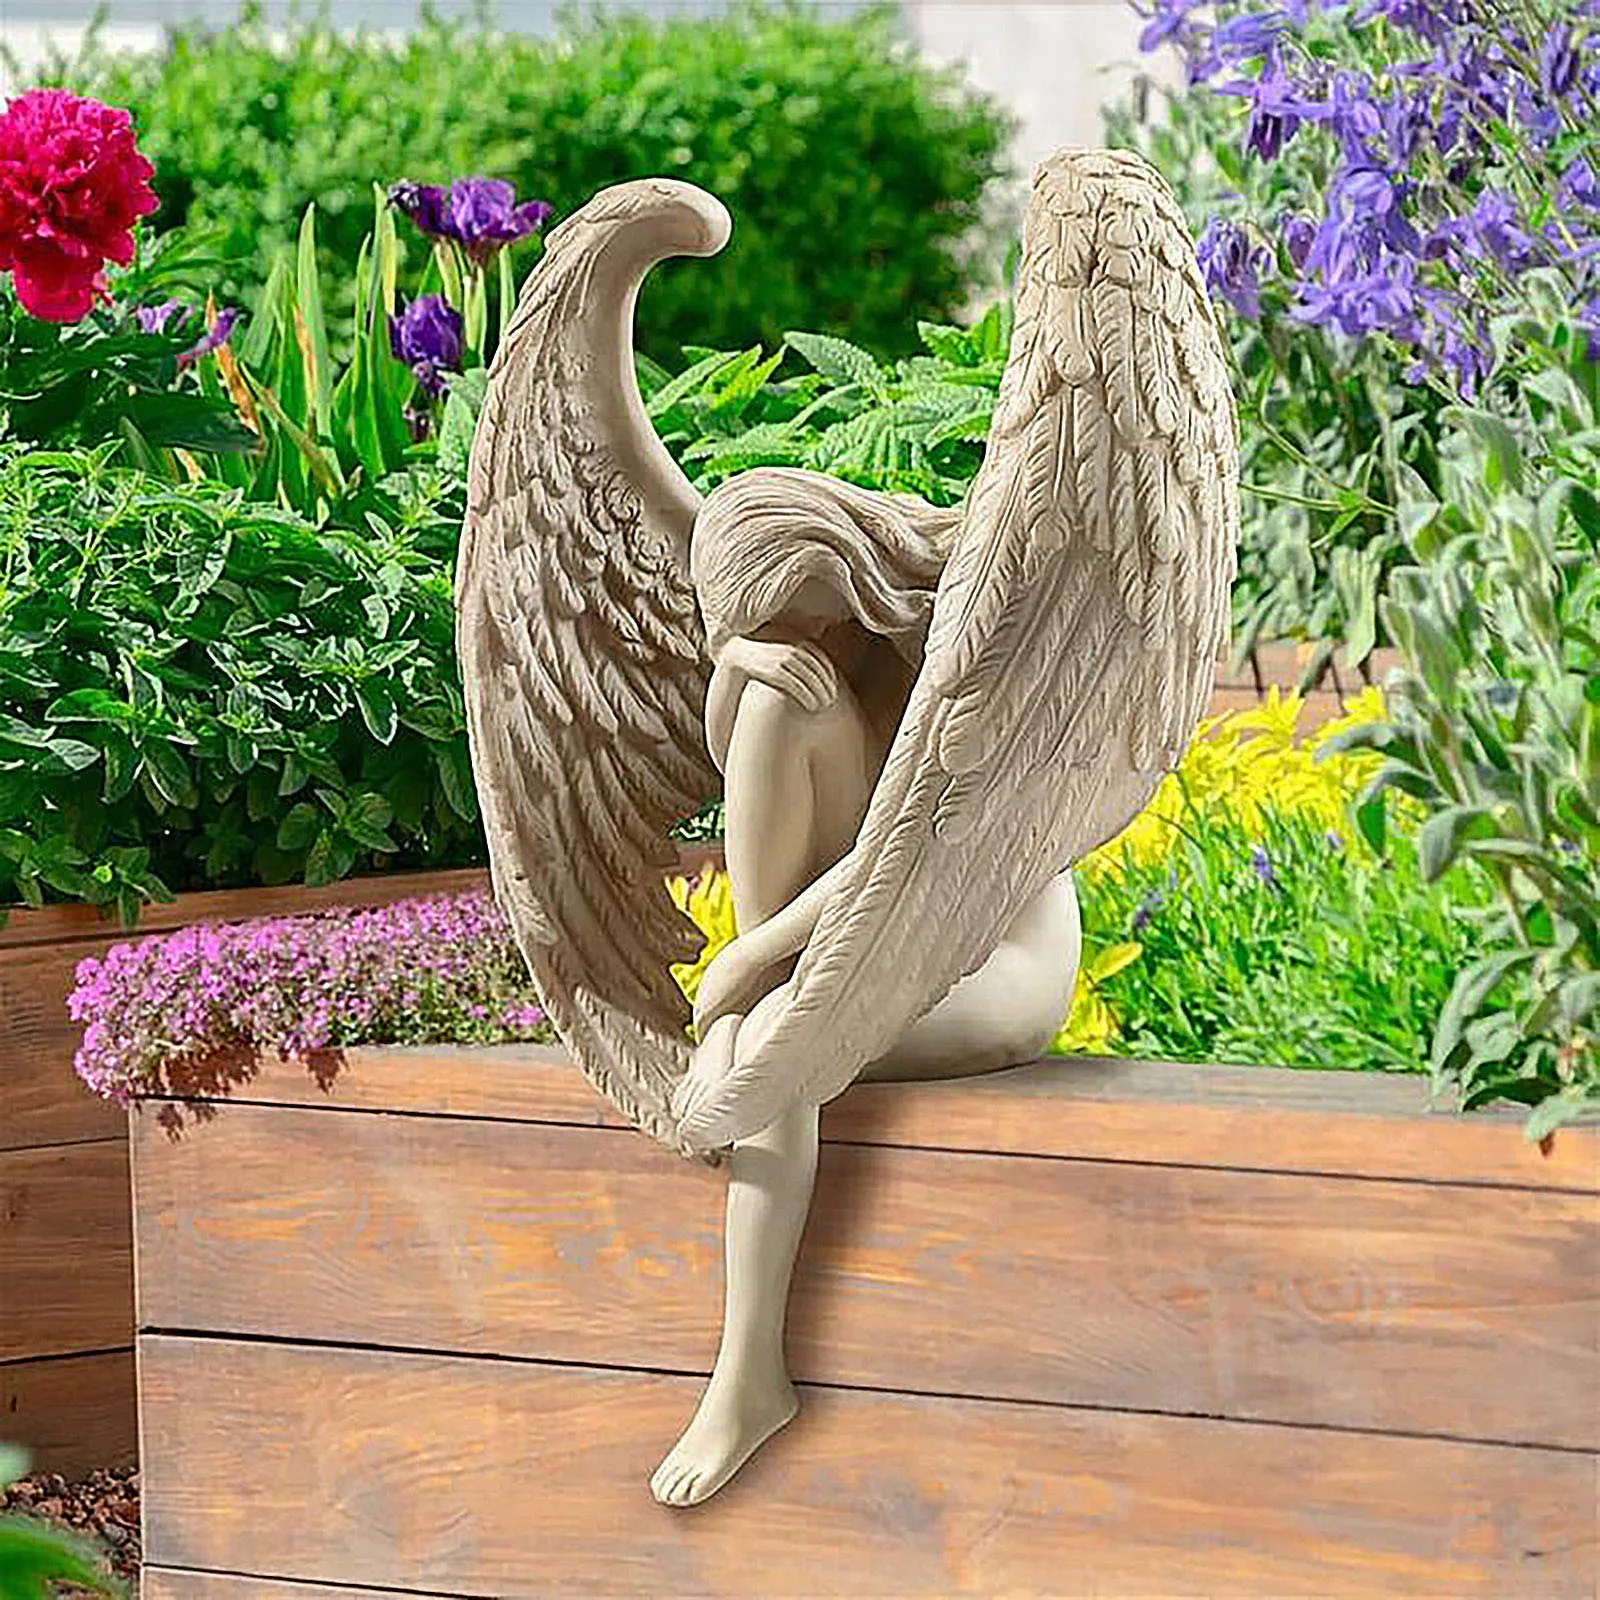 

Creative Sculpture Decoration Redemption Angel Statue Jewelry Redemption Statuette Religious Garden Home Decoration